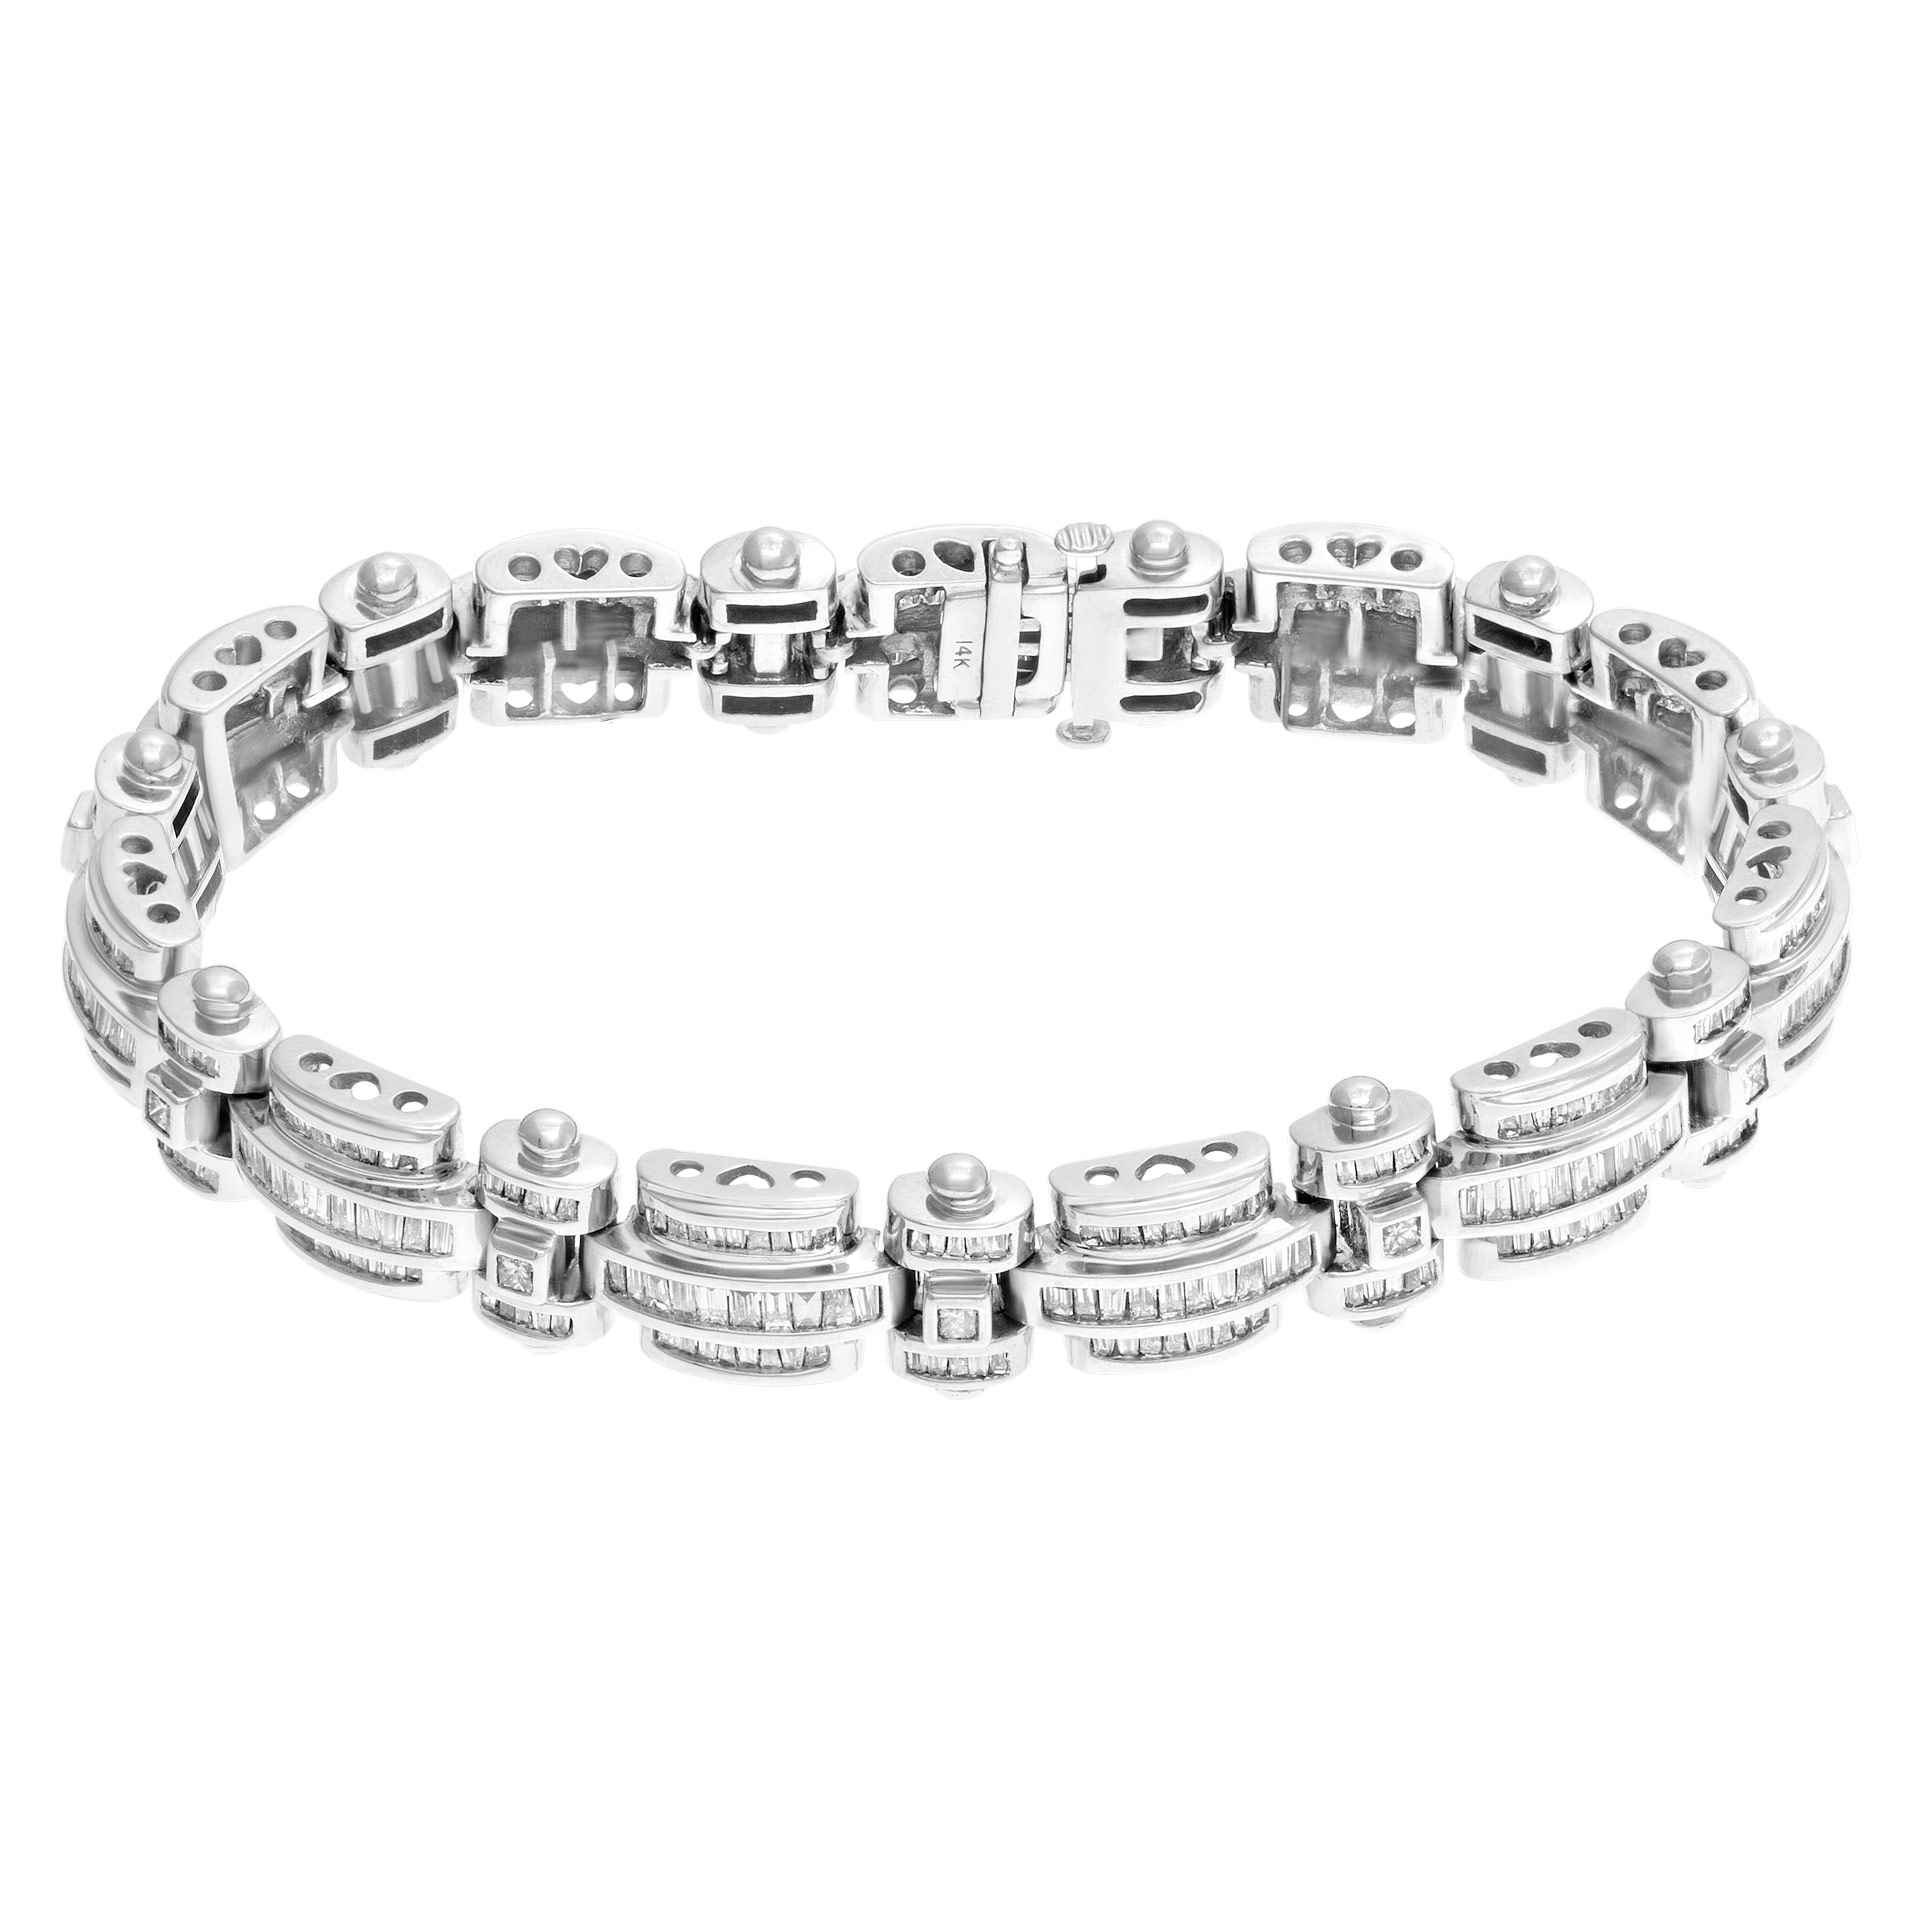 Diamond link bracelet in 14k white gold. Approximately 8.0 carats in diamonds.